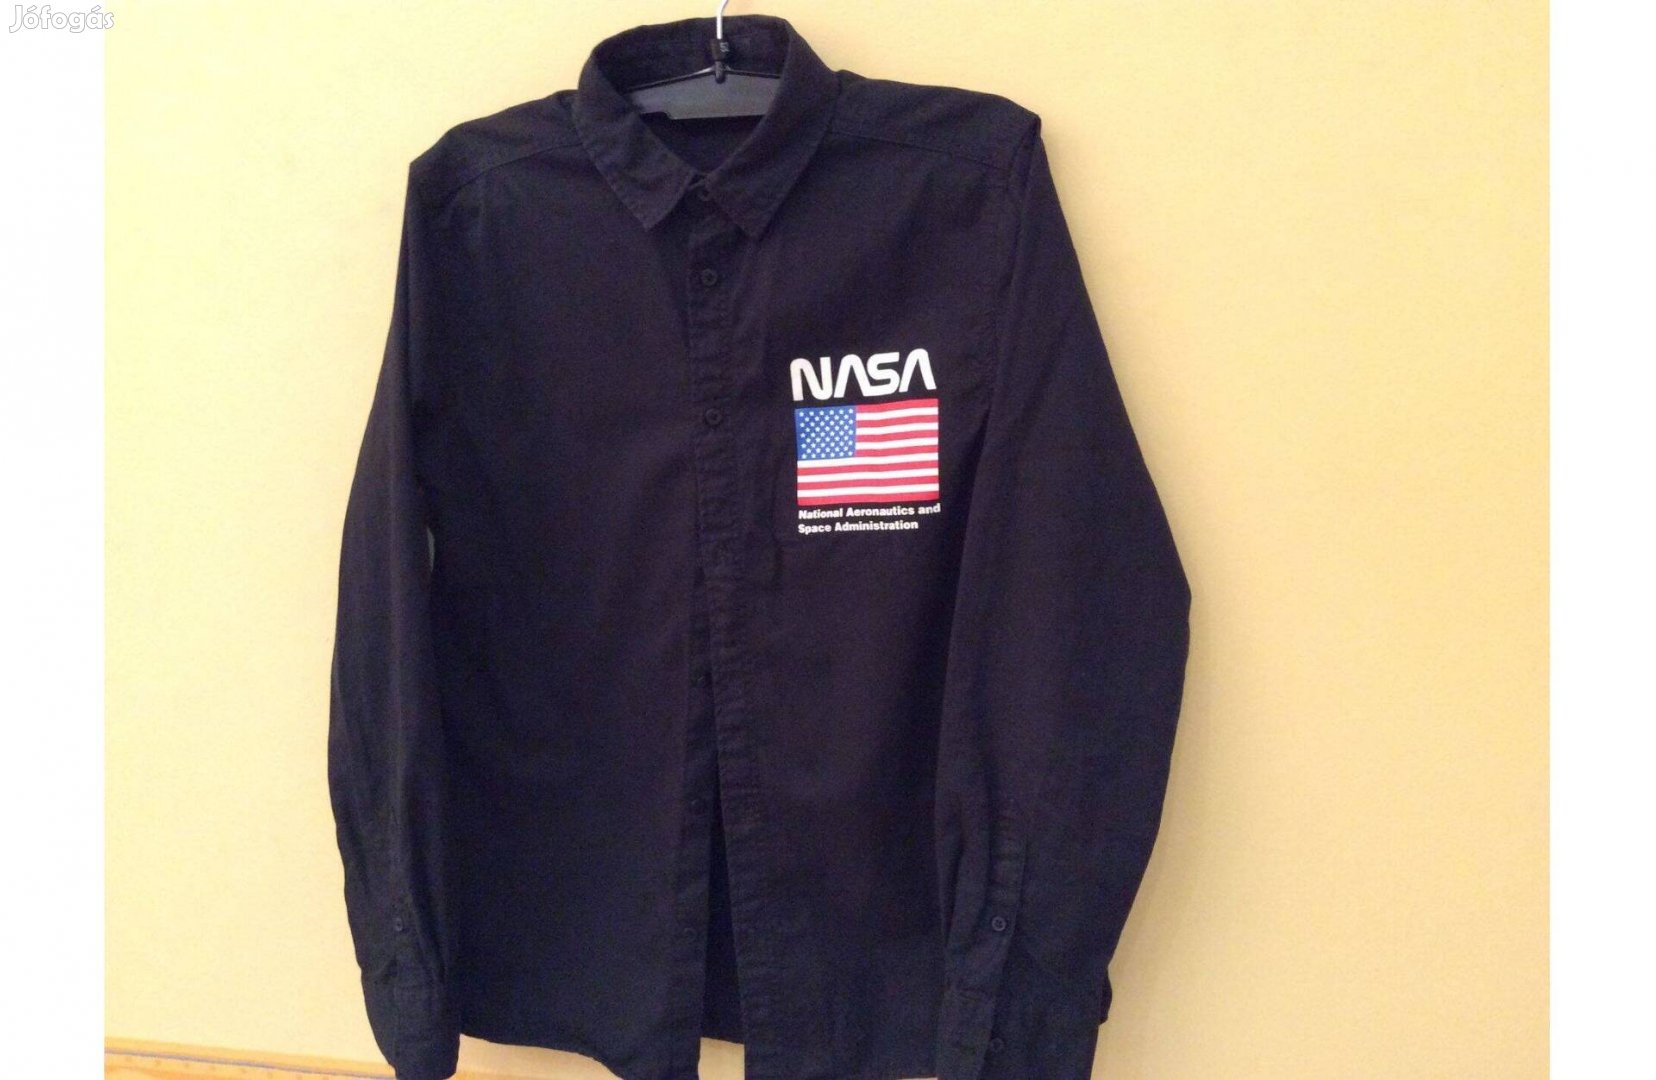 158-as fiú ing H&M hosszú ujjú fekete ing NASA